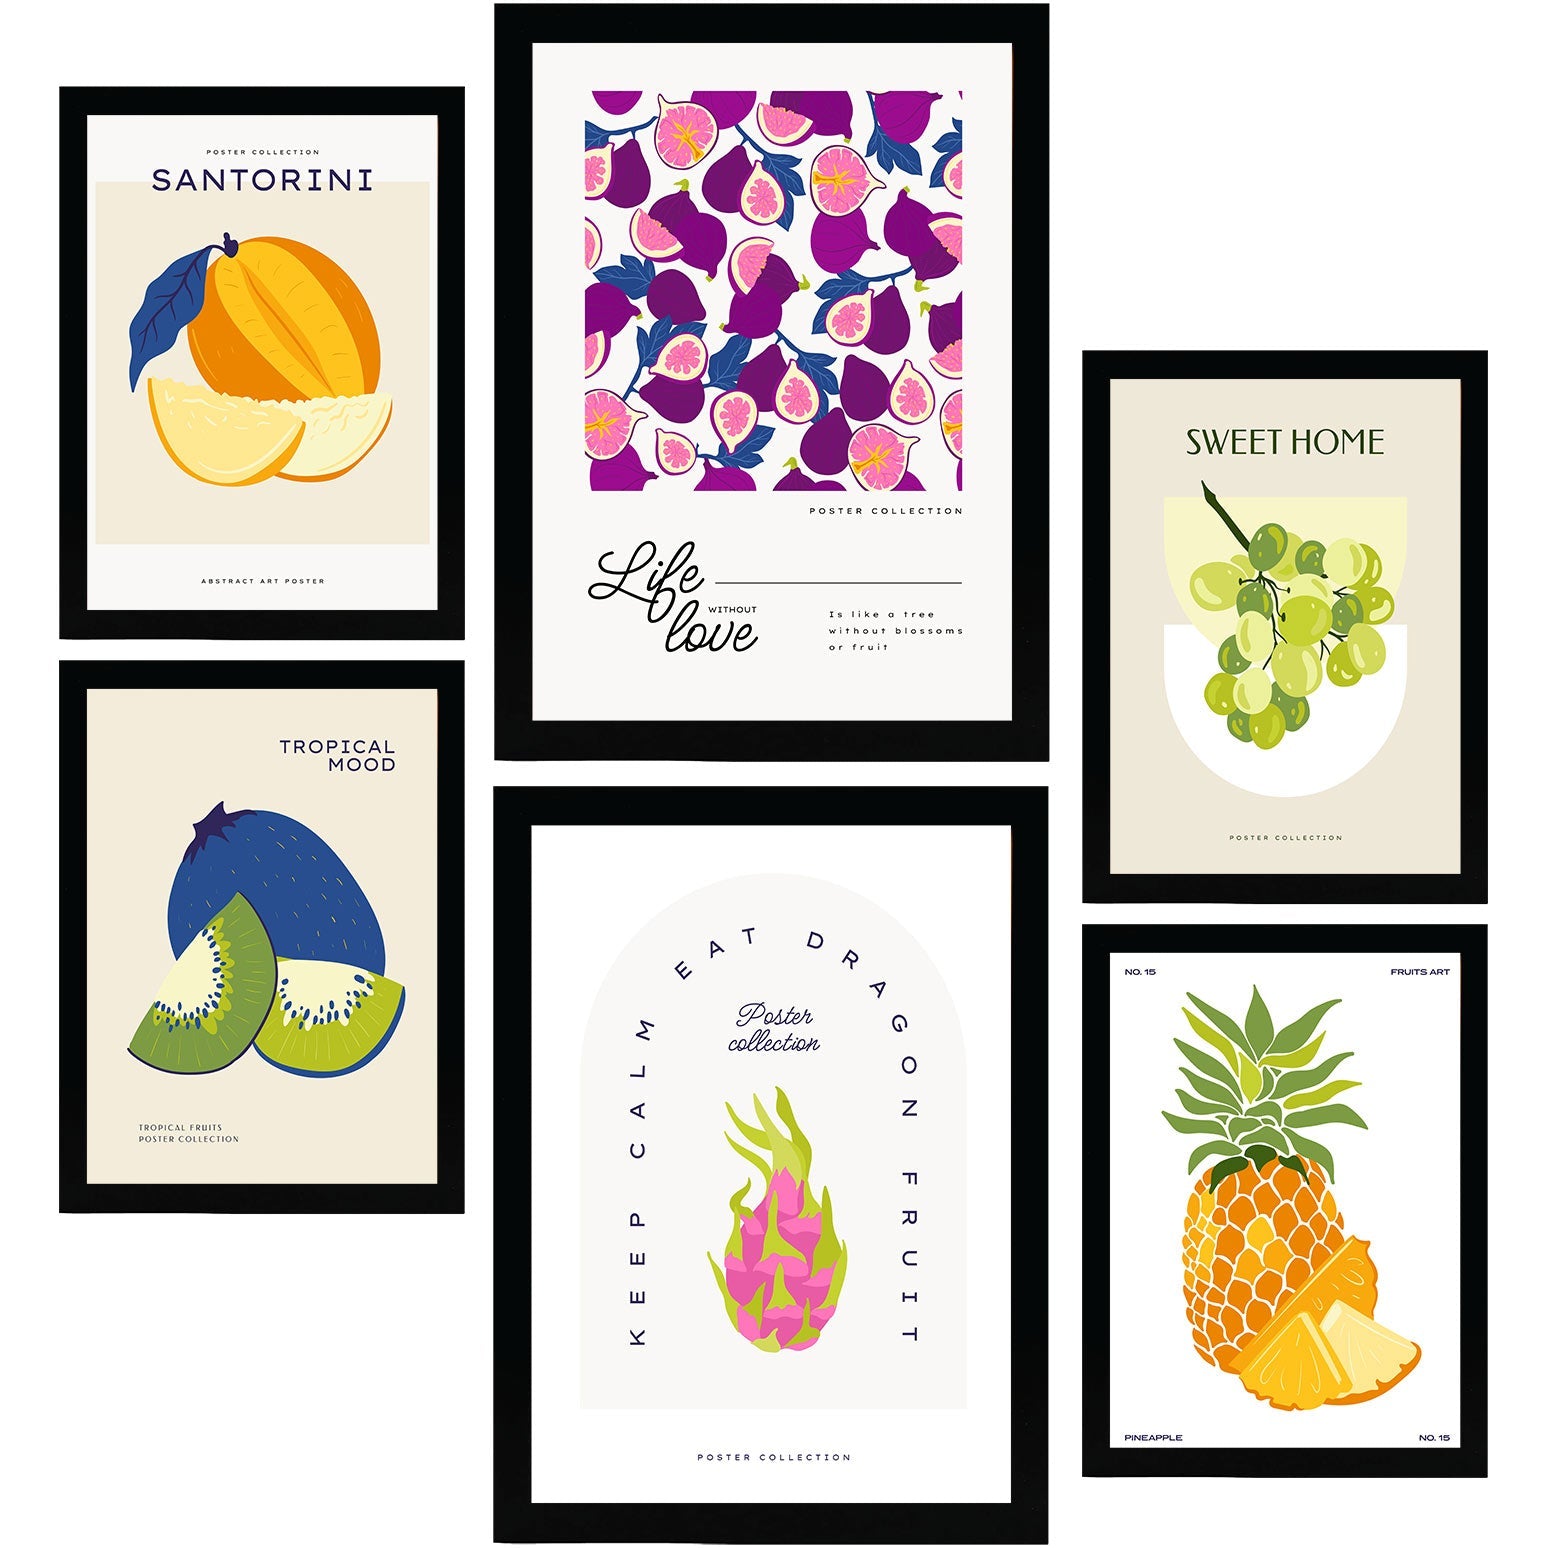 Food and Plants Posters. Sweet Fruits. Nature and Botany-Artwork-Nacnic-Nacnic Estudio SL